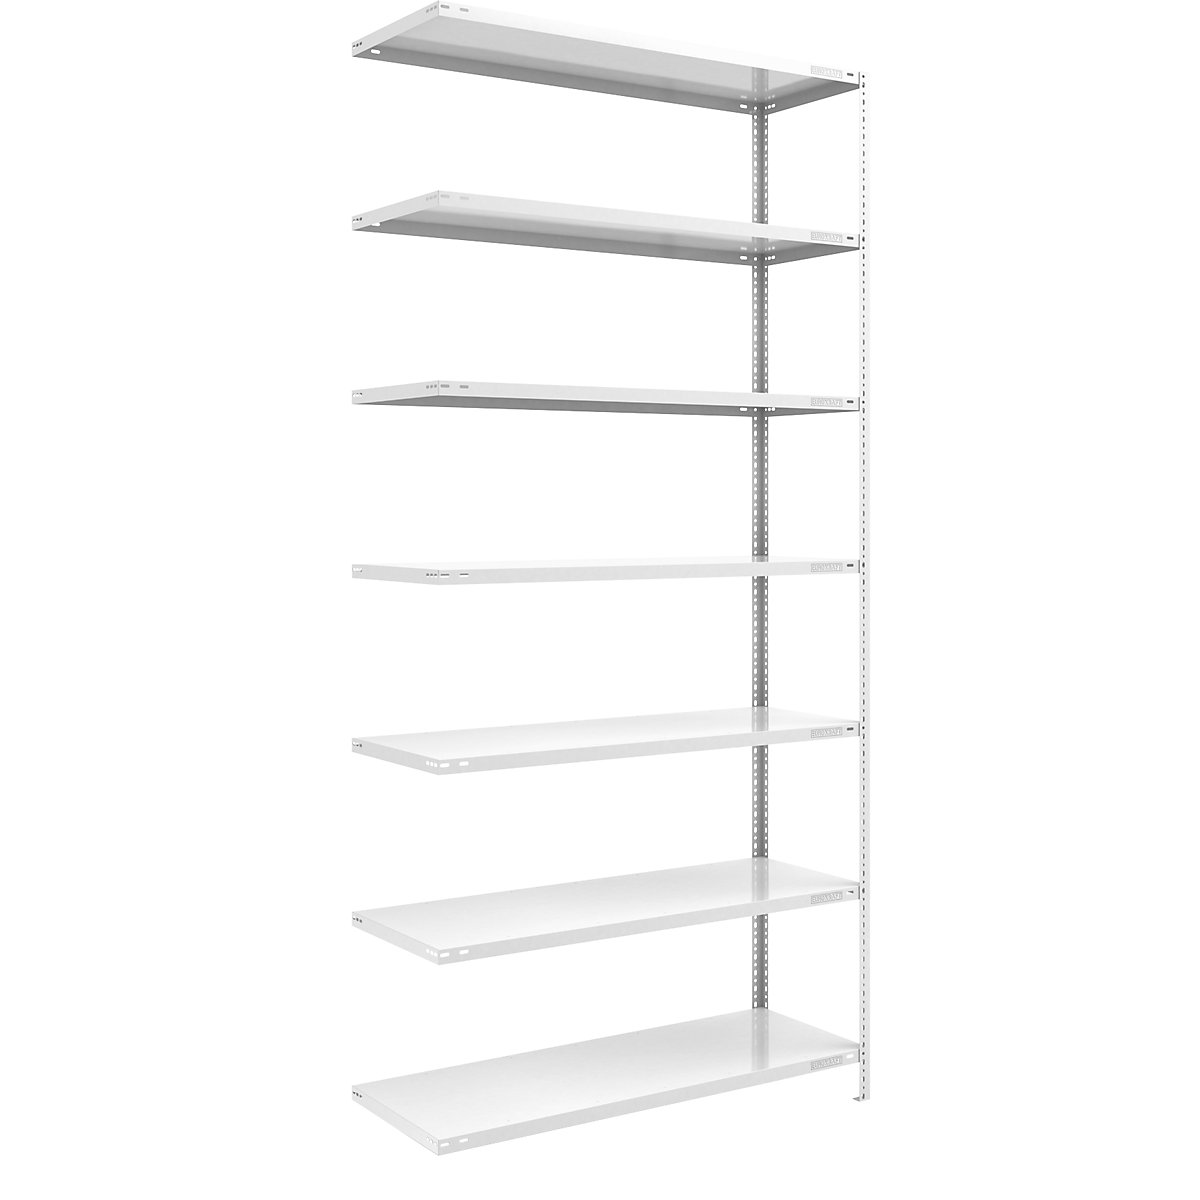 Bolt-together shelf unit, light duty, plastic coated – eurokraft pro, shelf unit height 3000 mm, shelf width 1300 mm, depth 600 mm, extension shelf unit-6